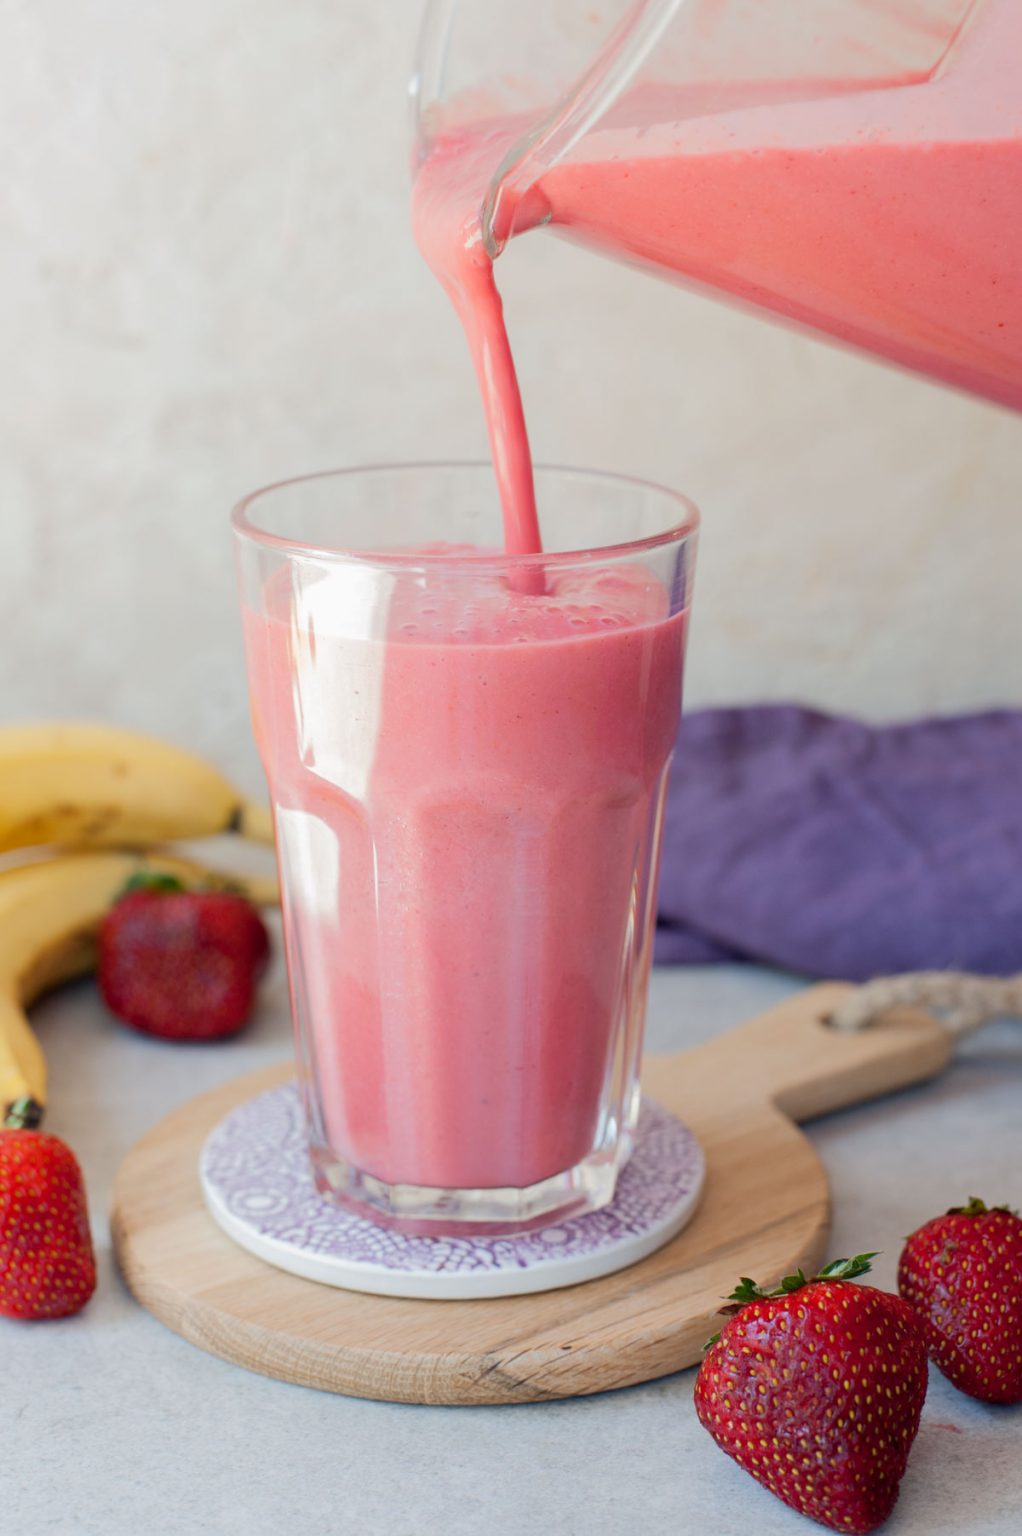 Strawberry banana milkshake - Everyday Delicious